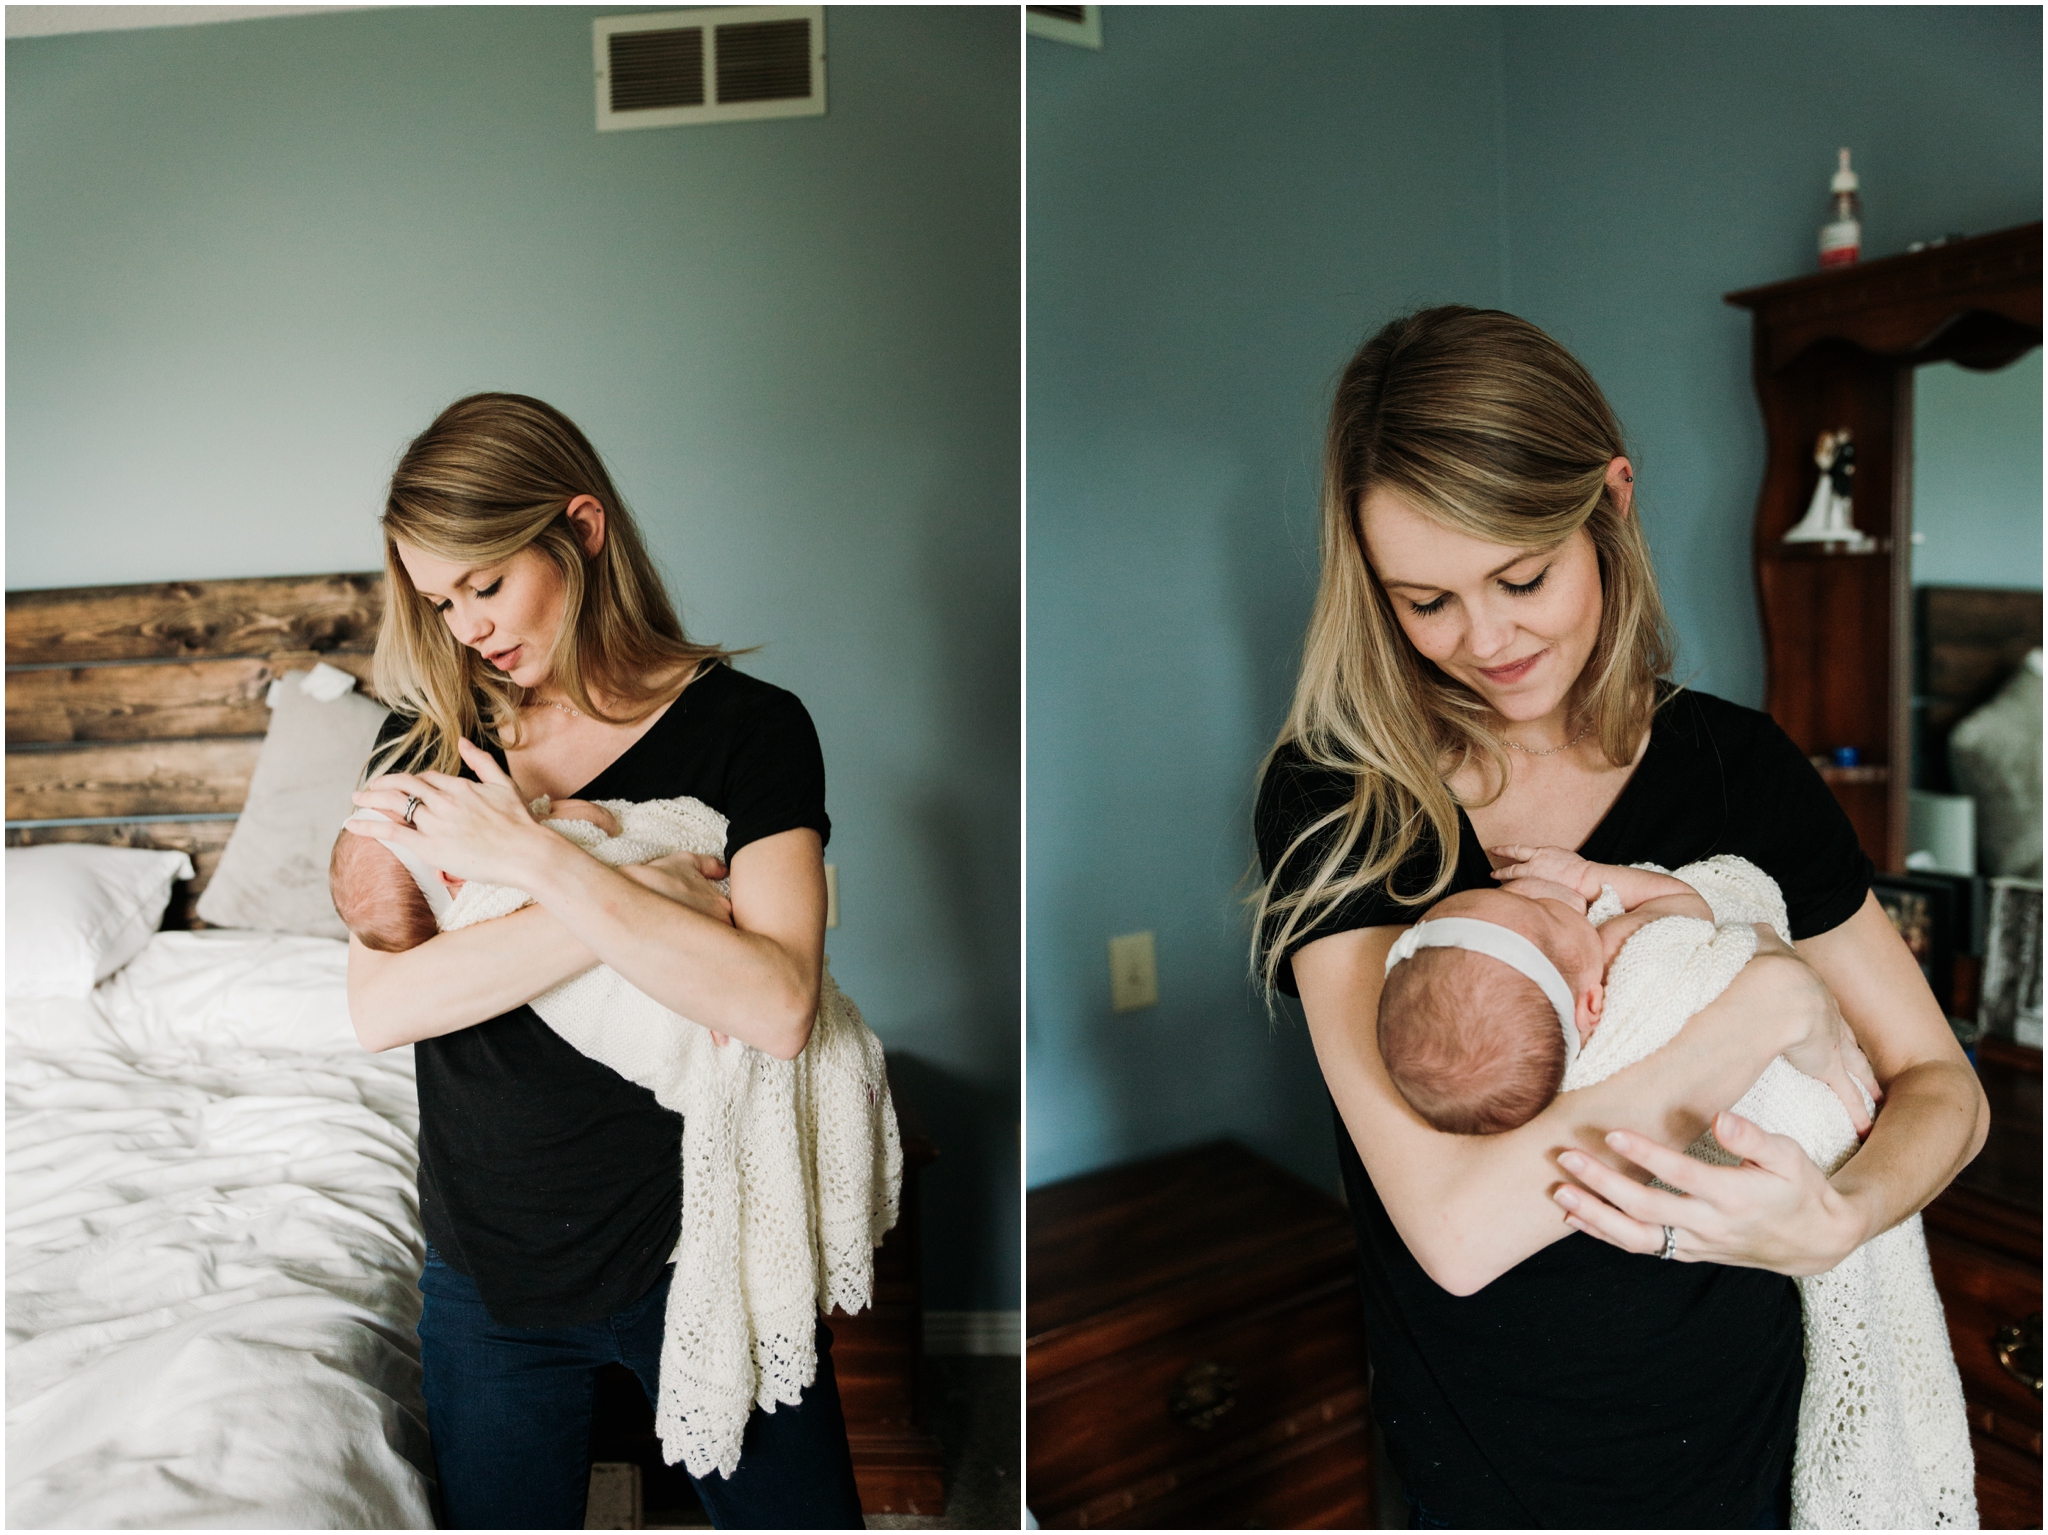 Sarnia Ontario In-home Newborn Photographer, Brittany VanRuymbeke Photos + Films, Chatham-Kent Photographer